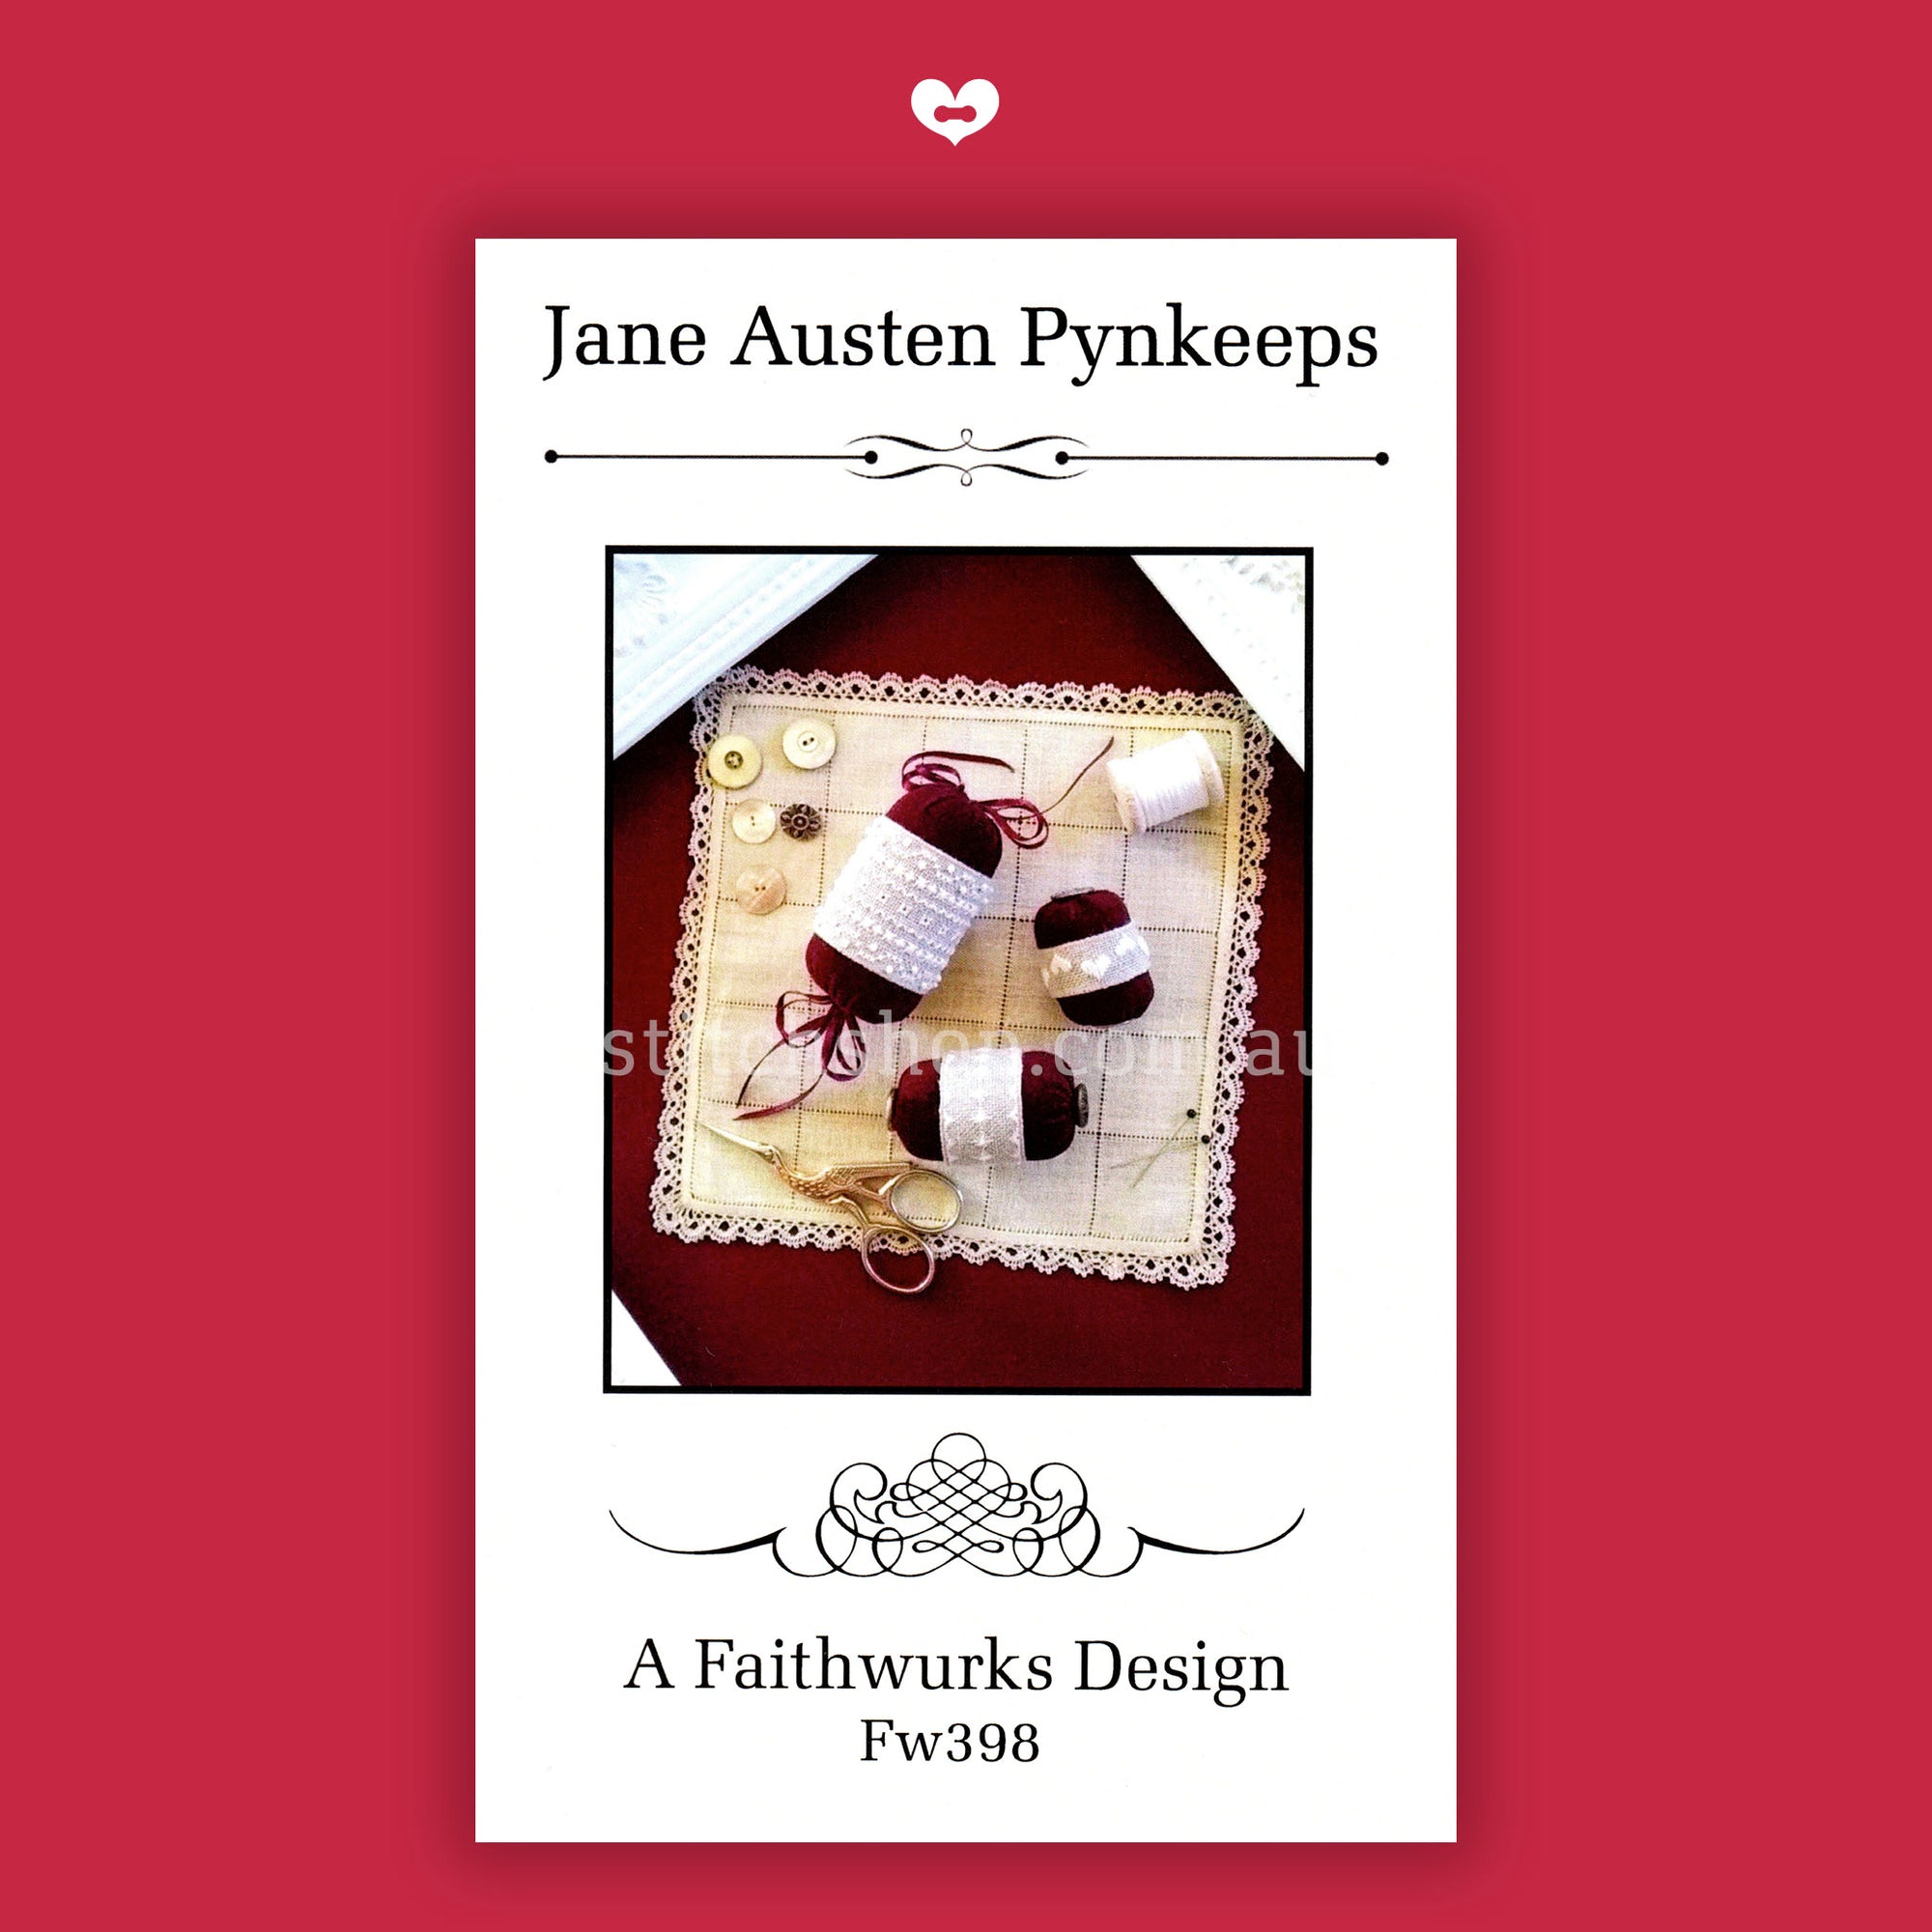 Jane Austen Pynkeeps